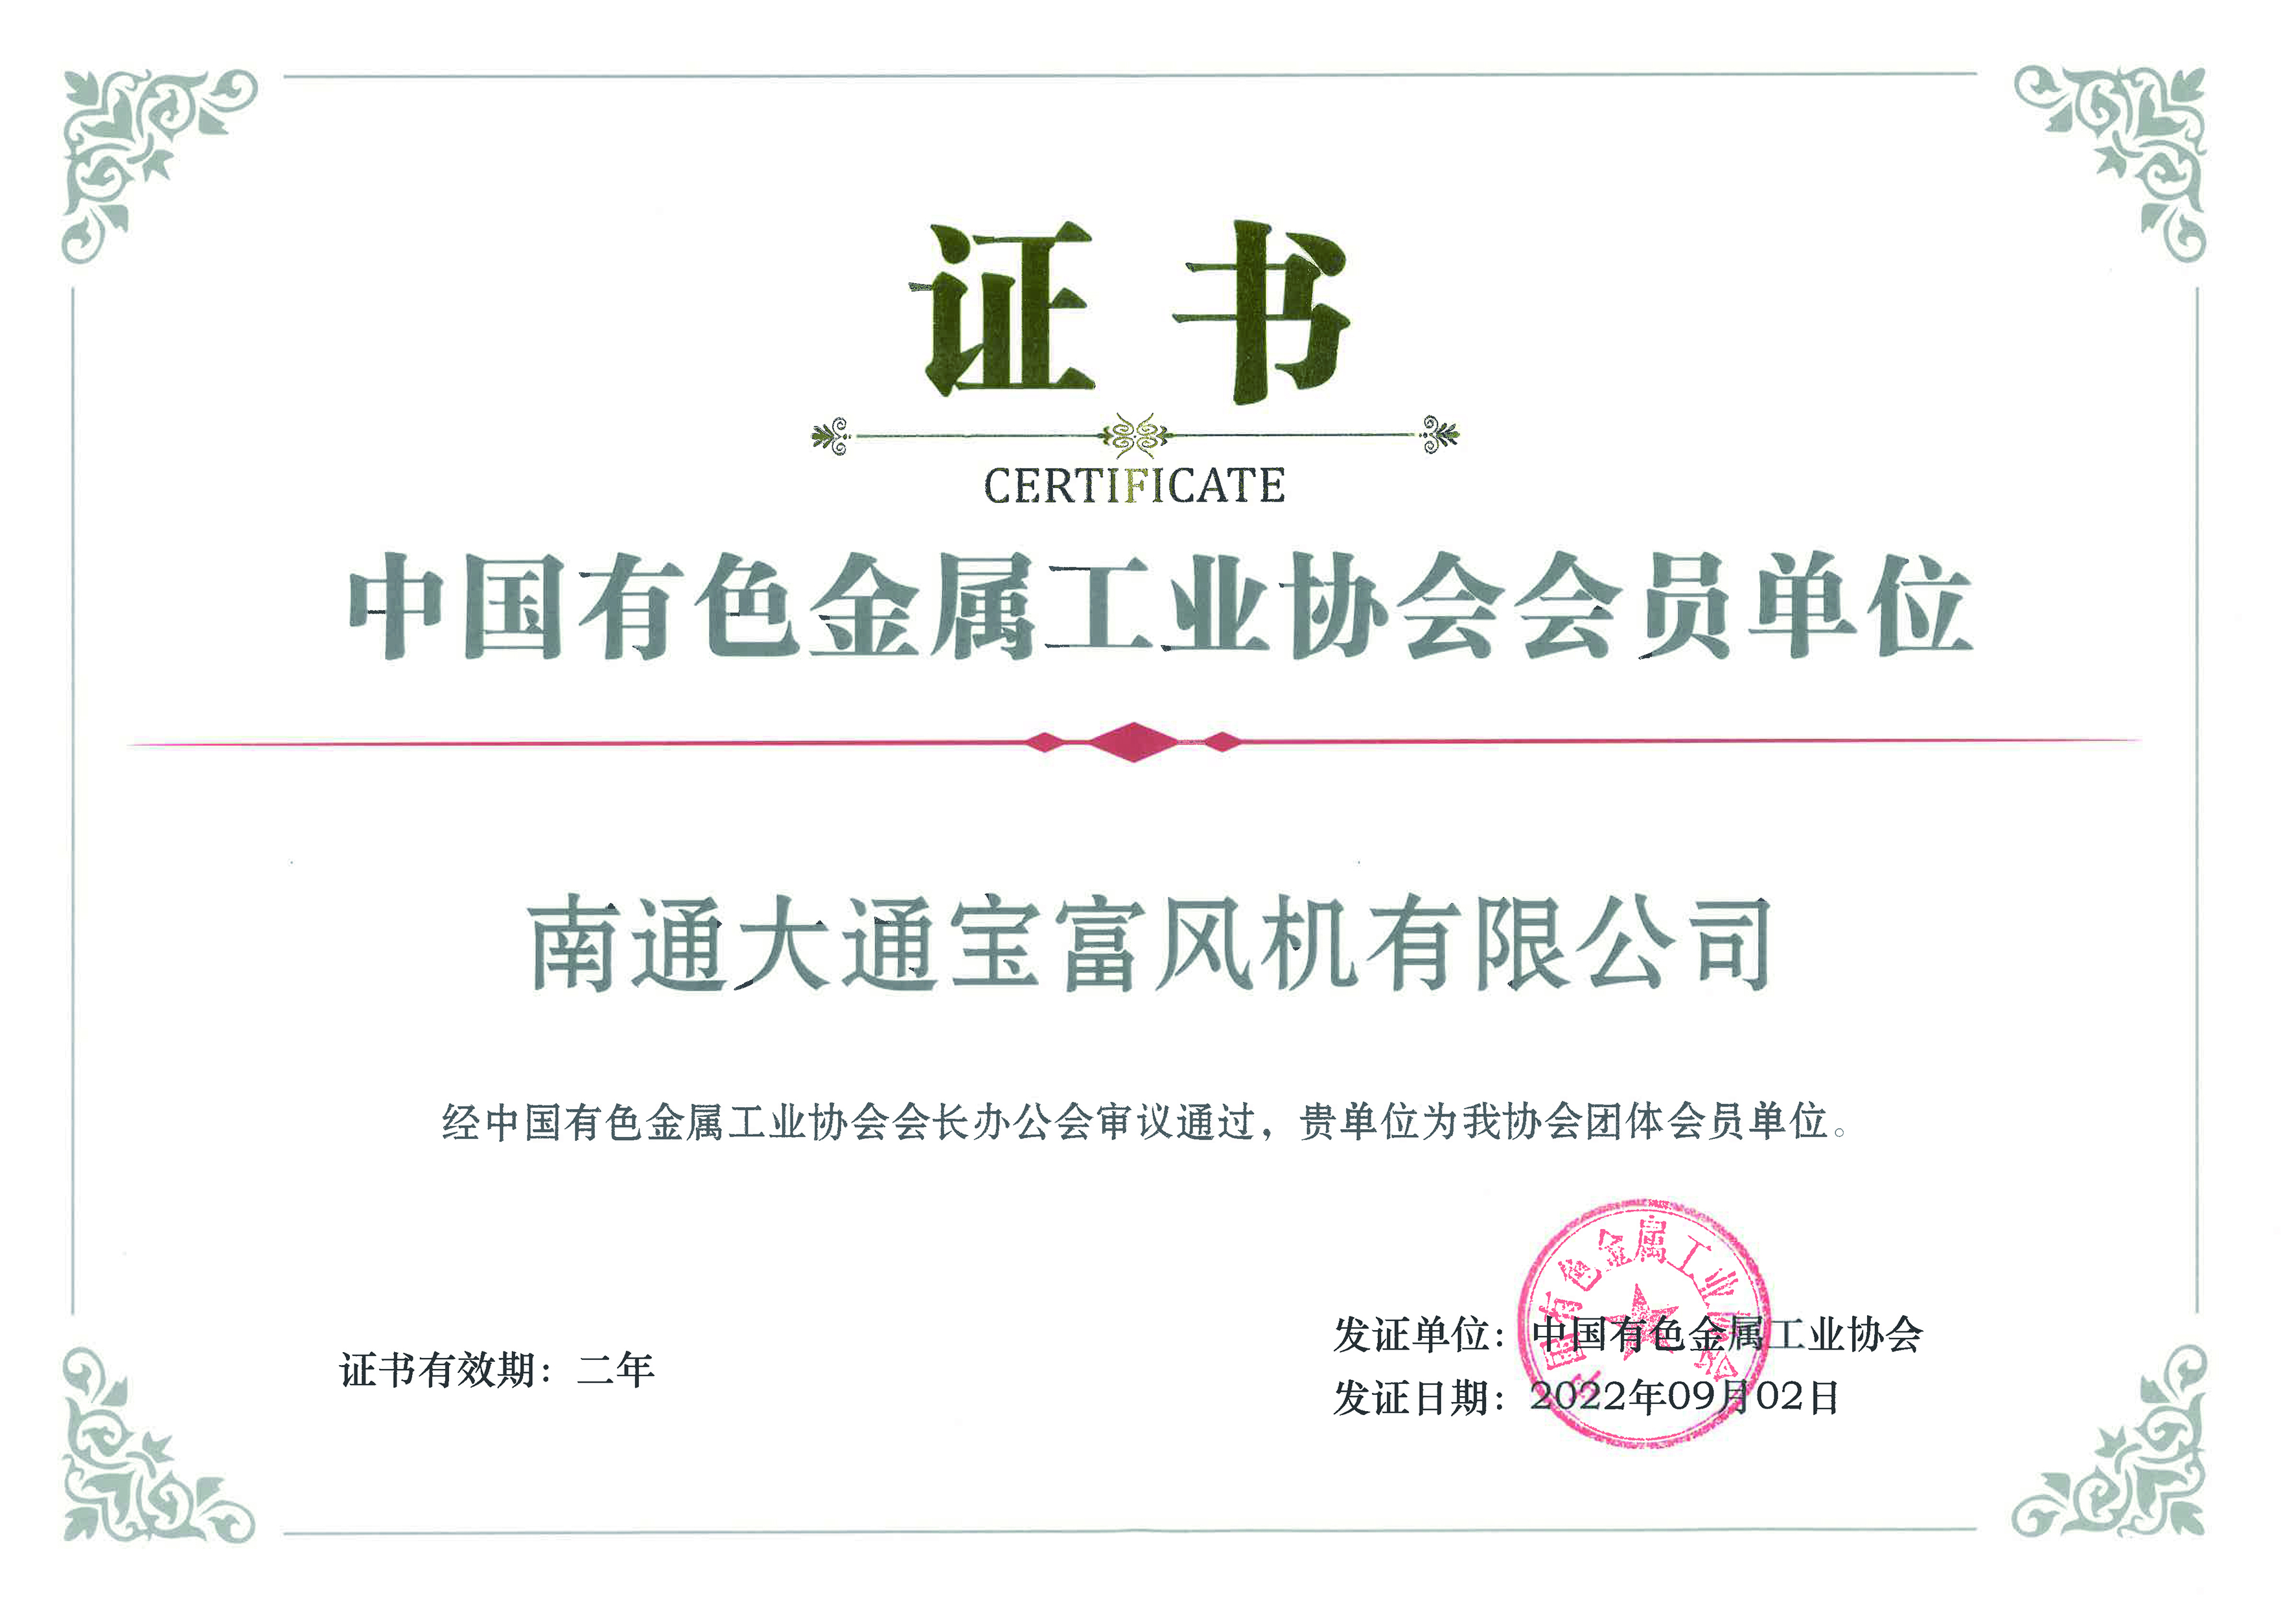 Member of China Nonferrous Metals Industry Association